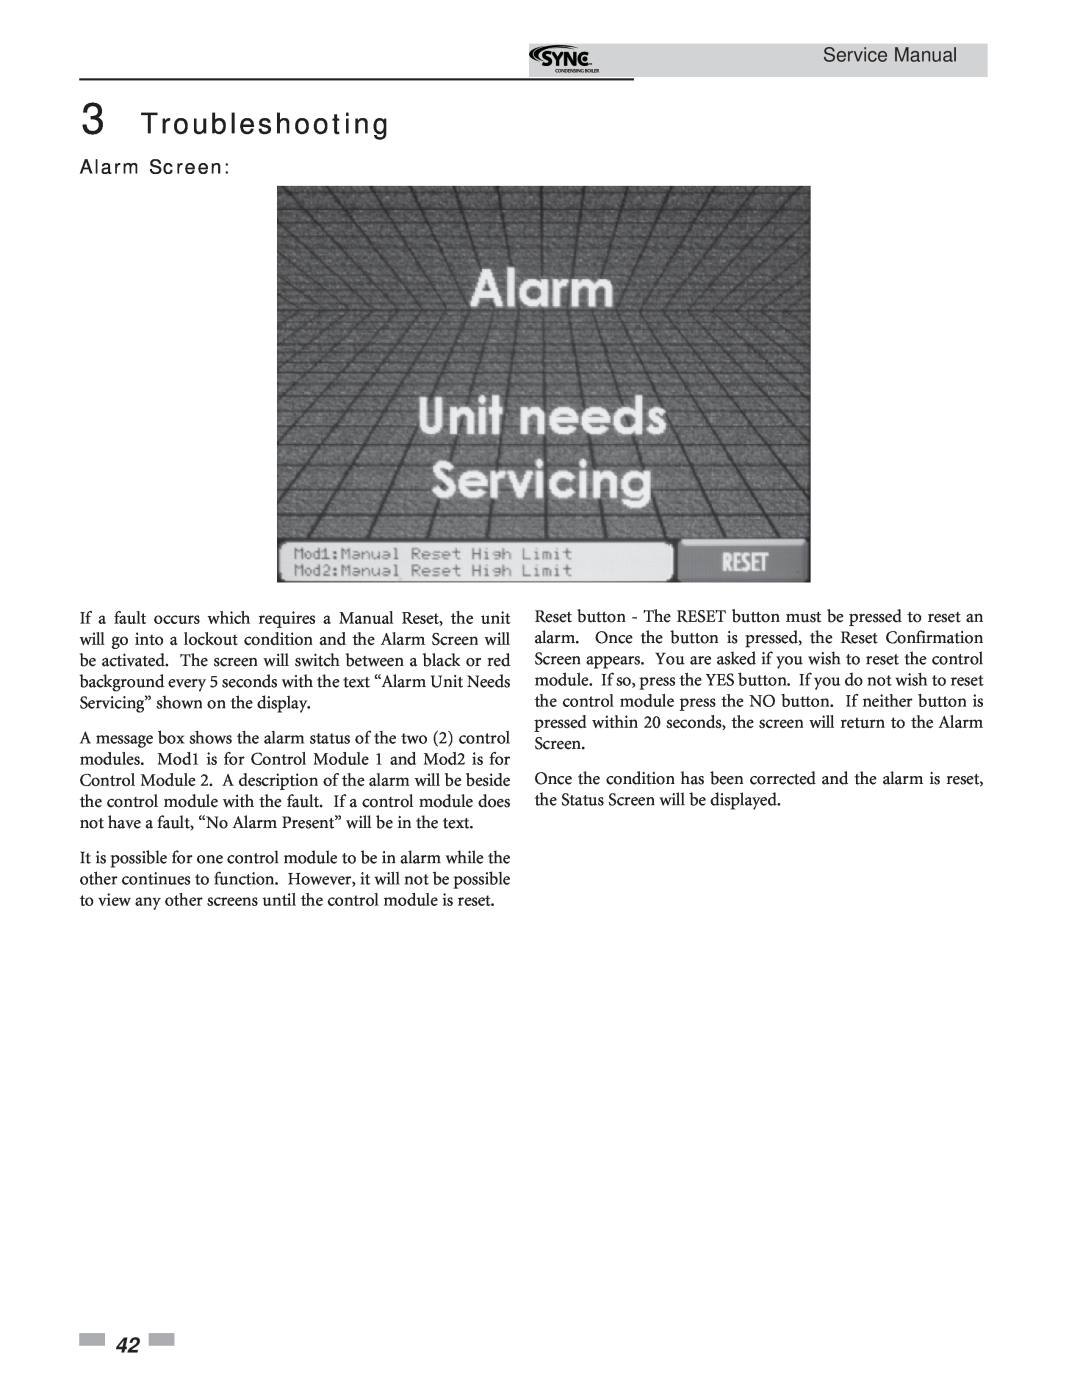 Lochinvar 1.3 service manual Troubleshooting, Service Manual, Alarm Screen 